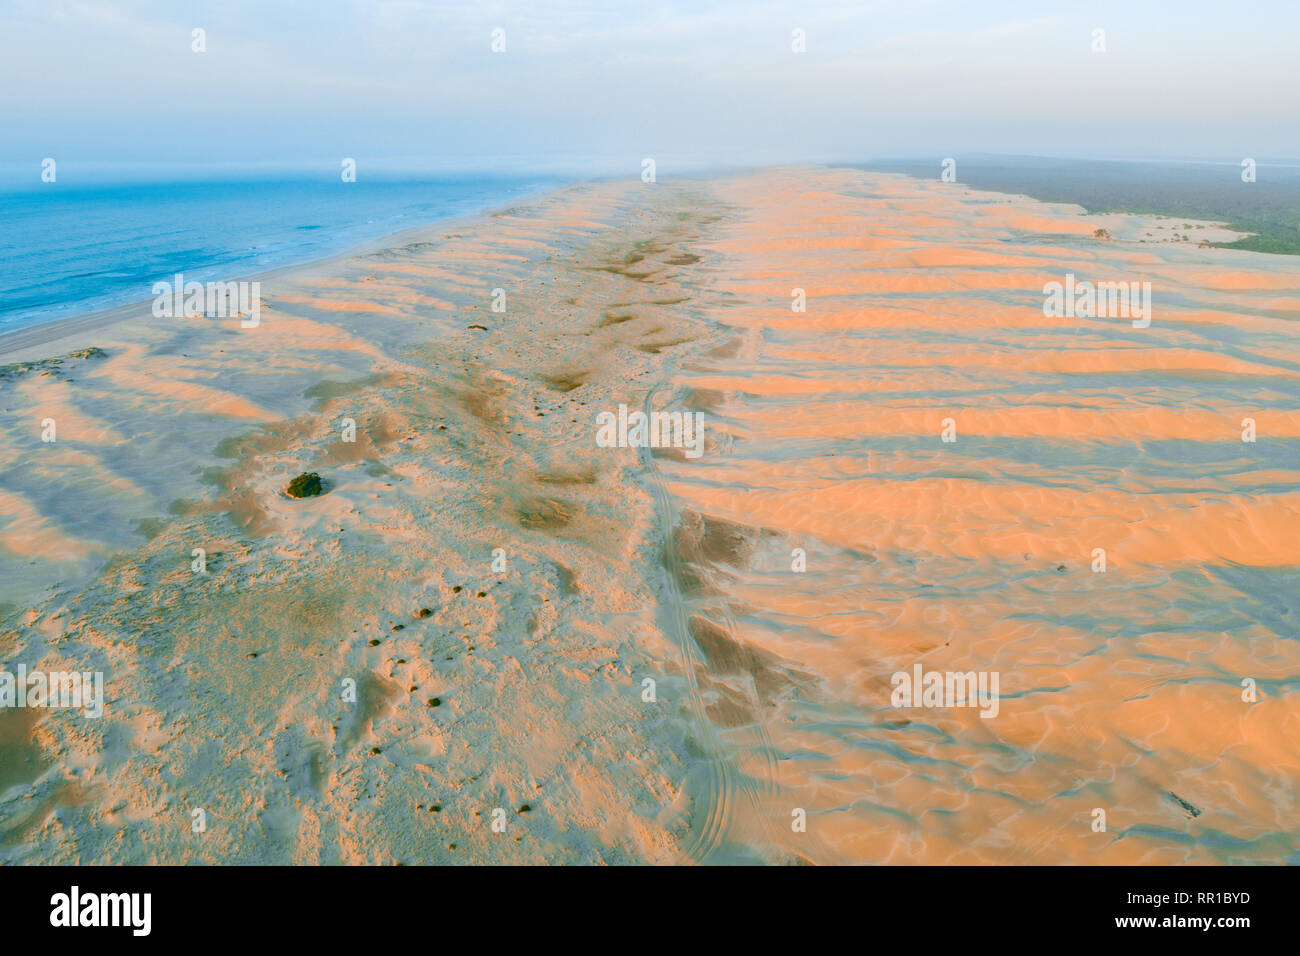 Stockton beach sand dunes at sunrise - aerial view Stock Photo